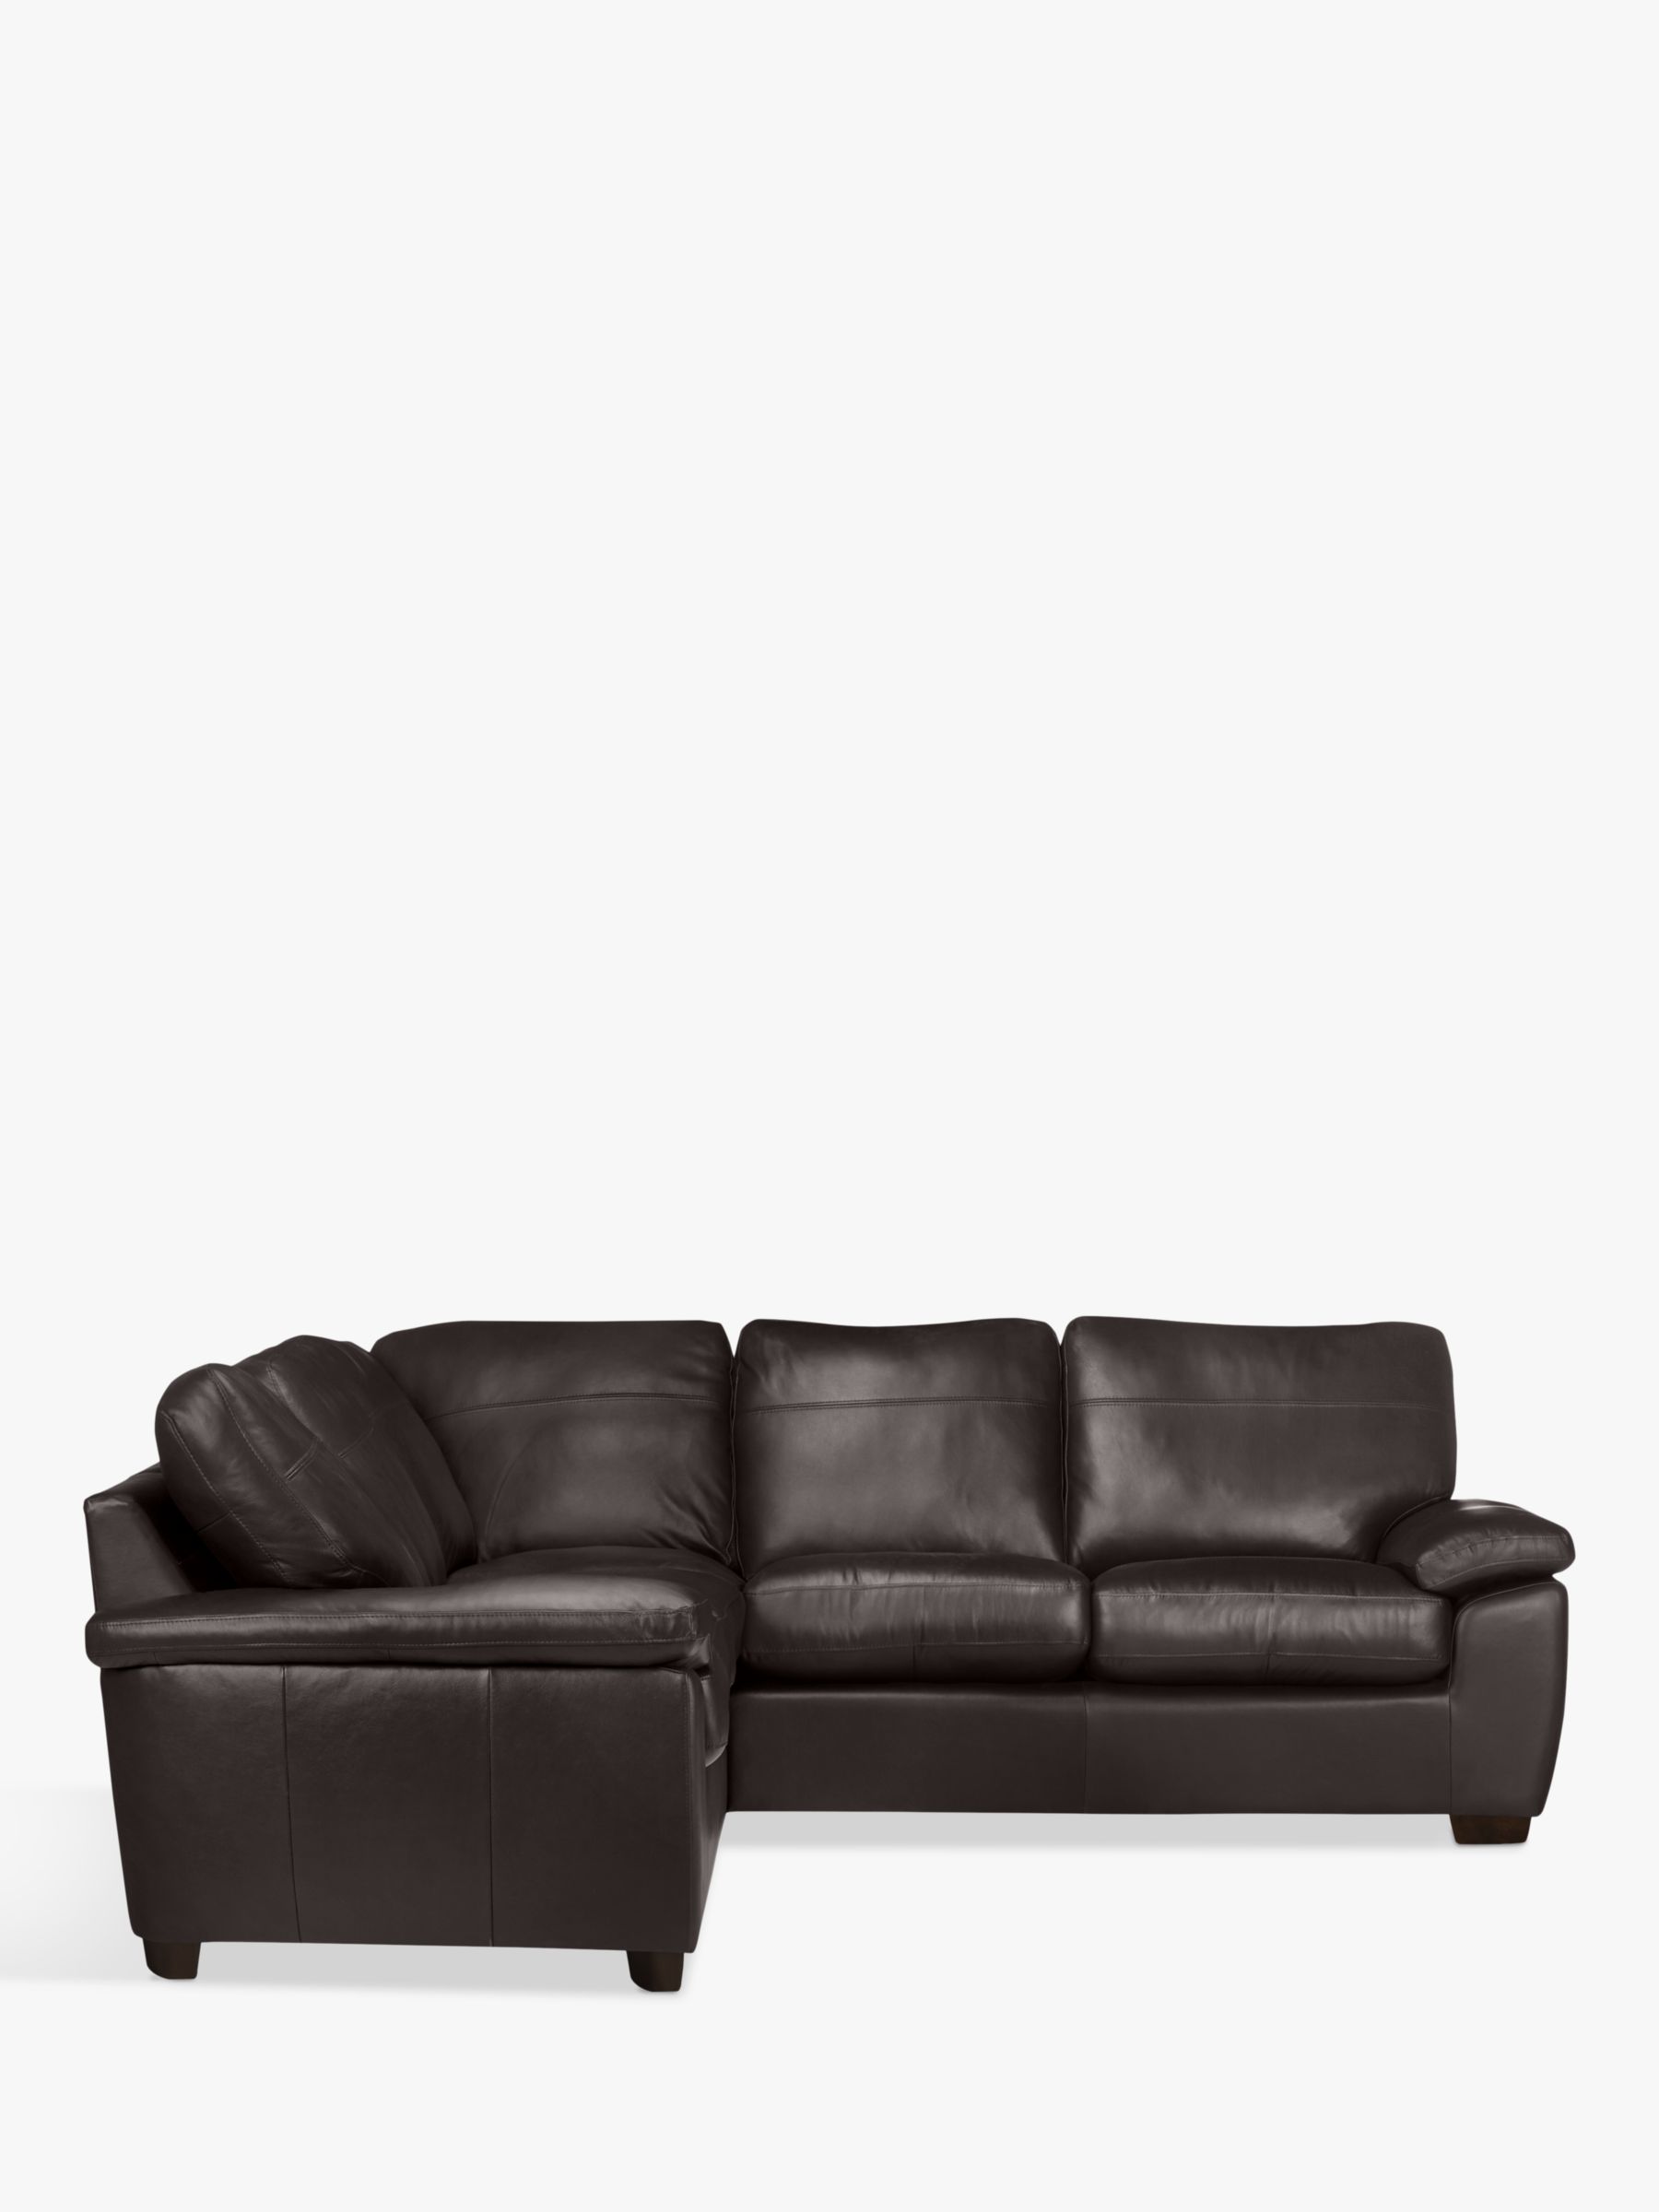 Photo of John lewis camden 5+ seater leather corner sofa dark leg